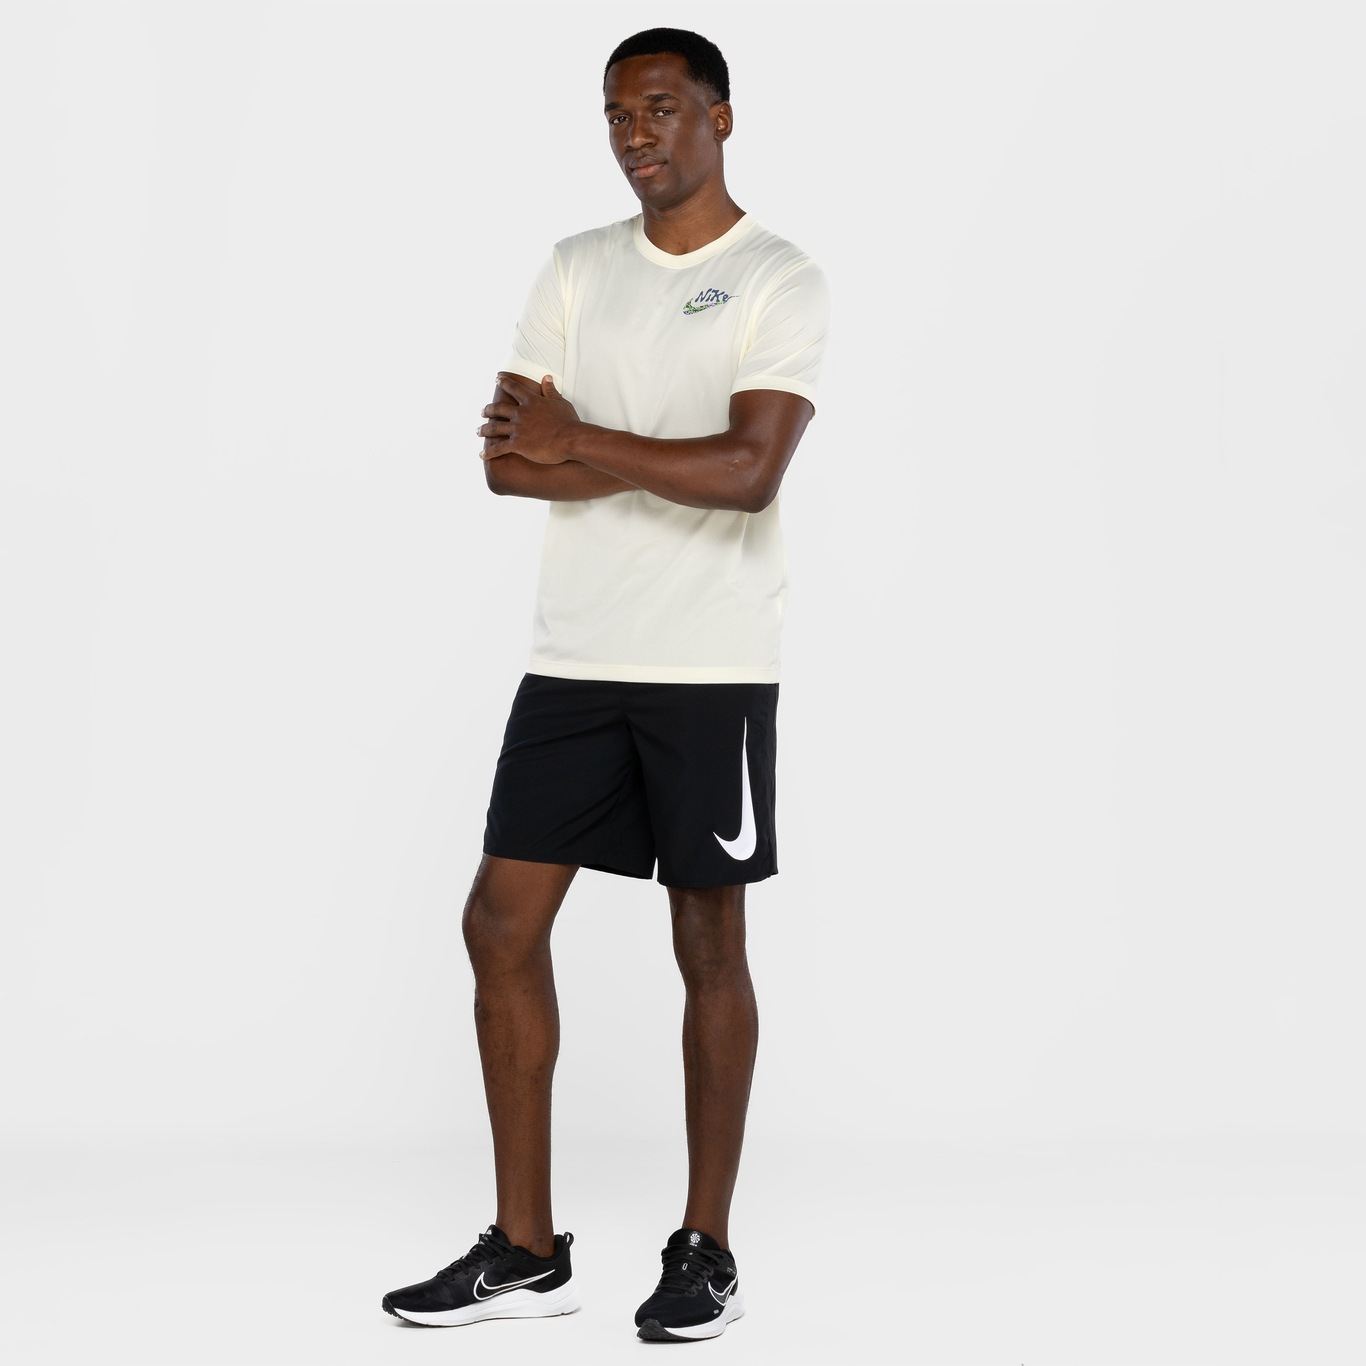 Calça Legging Masculina Nike Dri-Fit Challenger Tight em Promoção